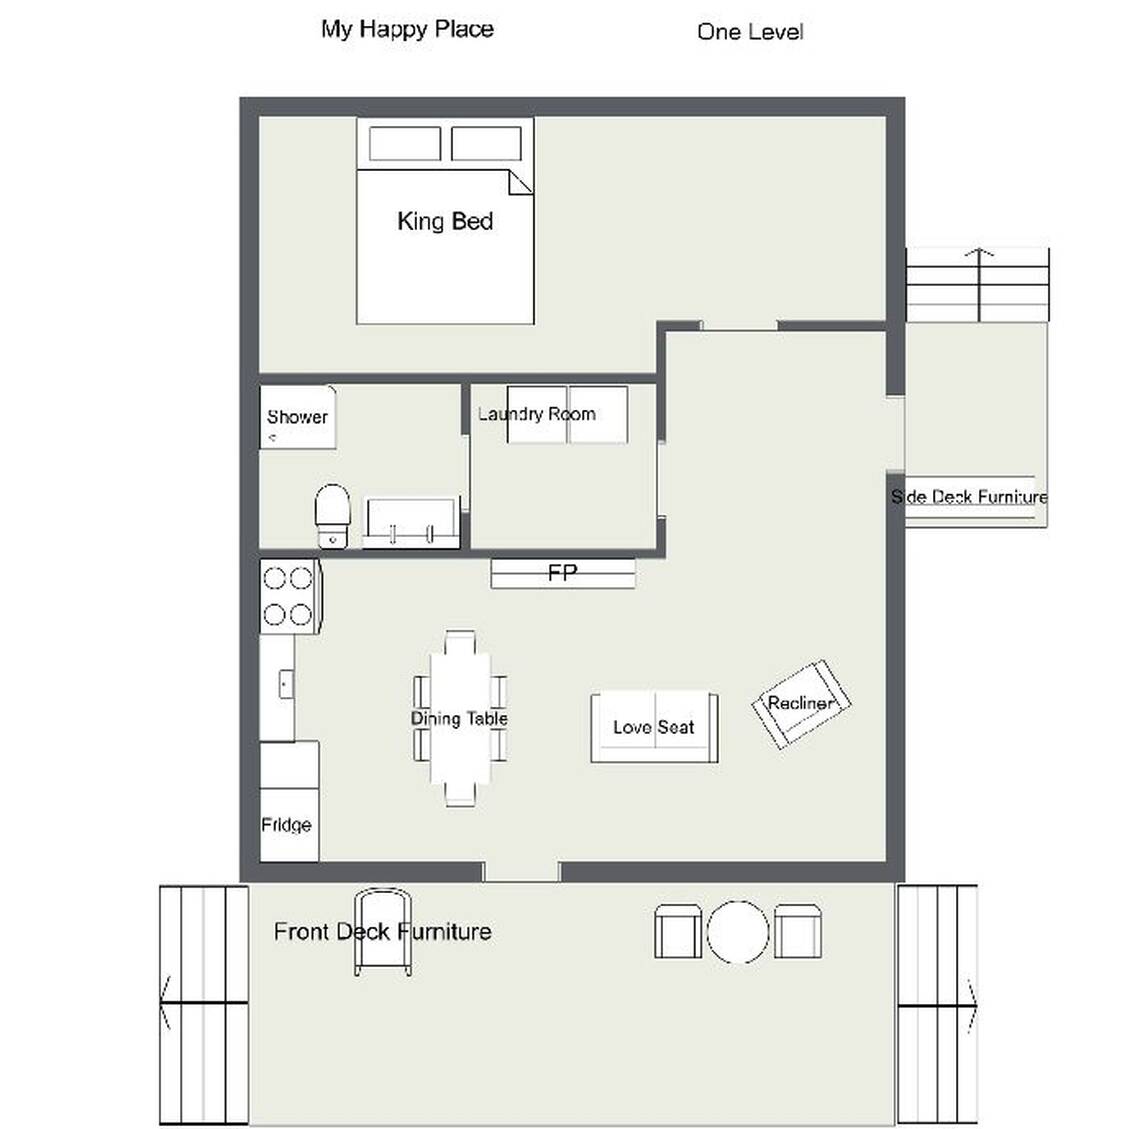 My Happy Place floorplan